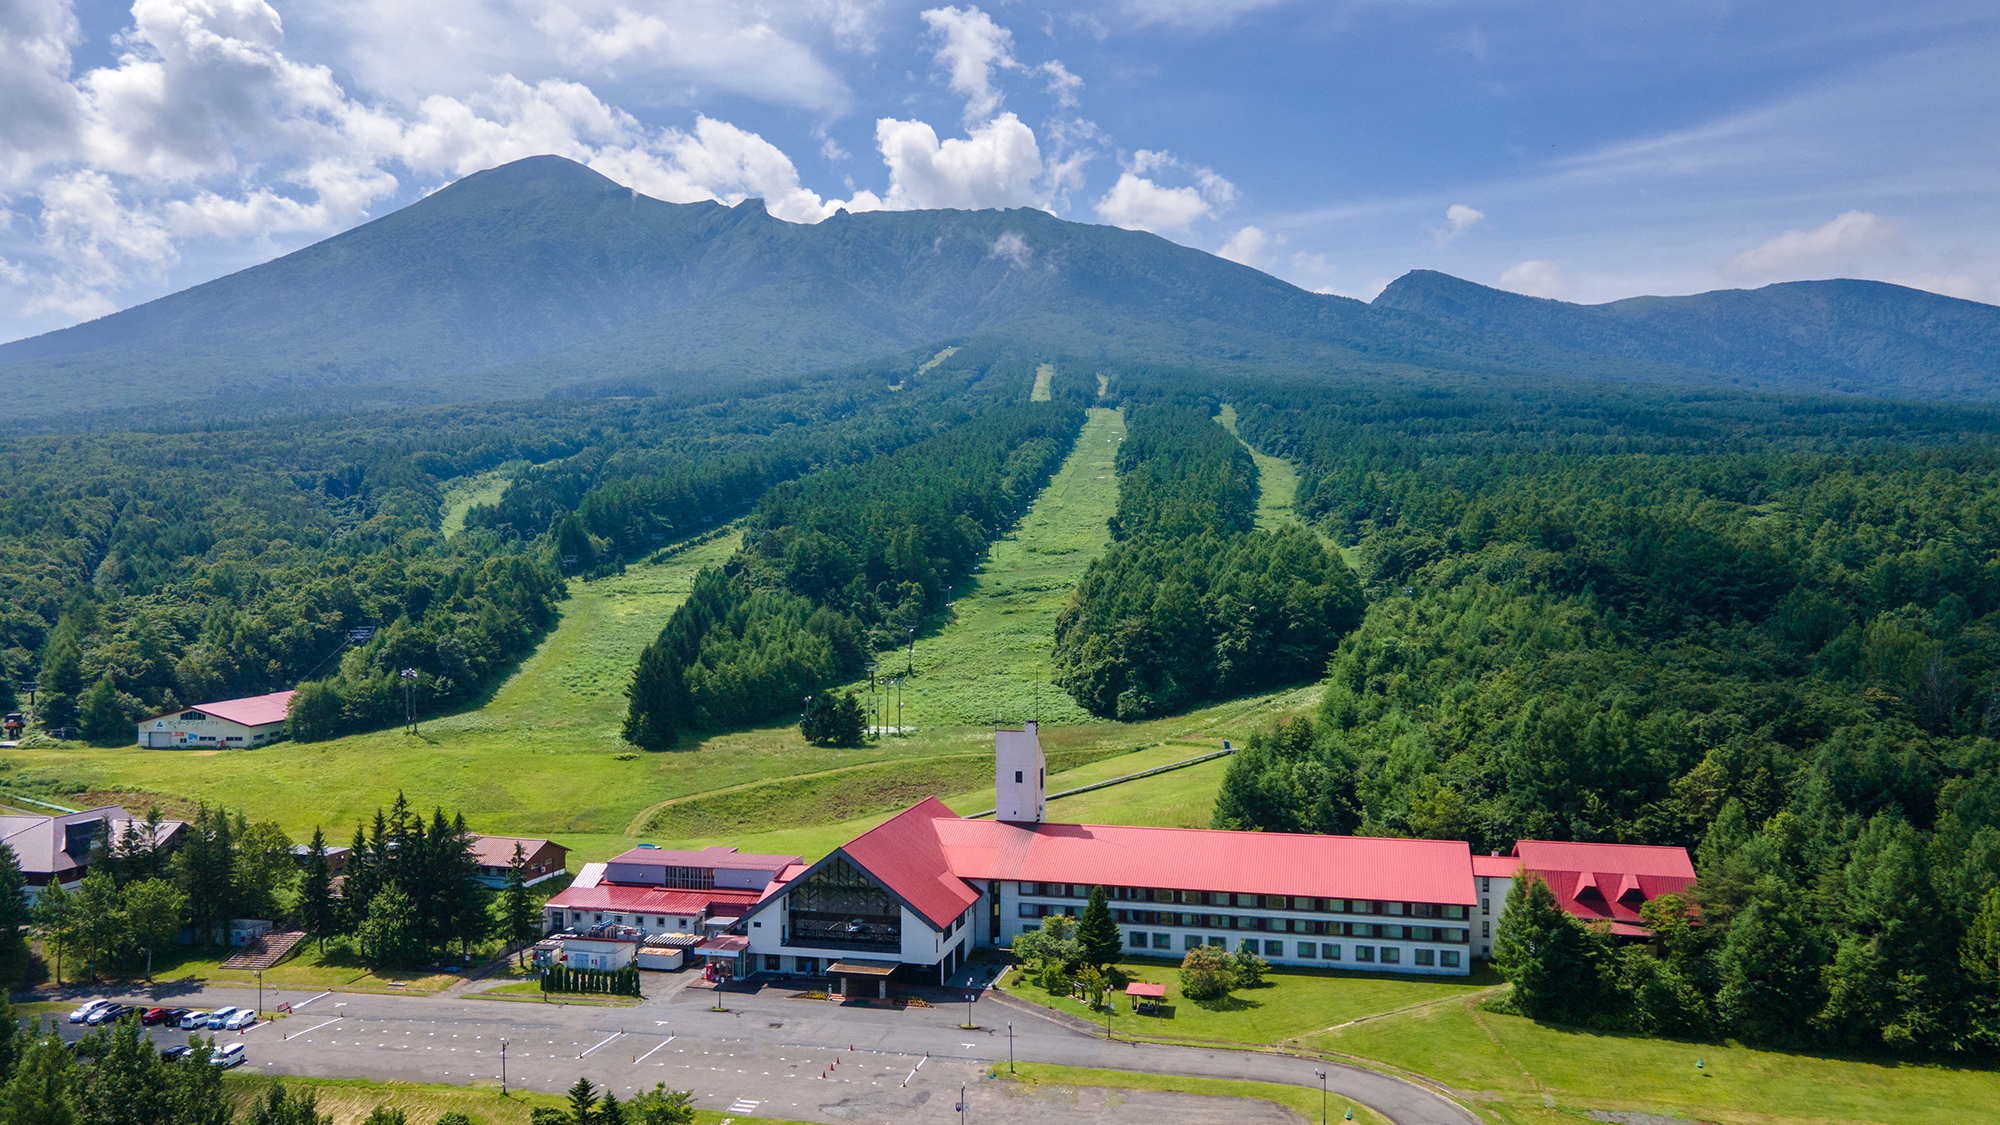 Hachimantai Mountain Hotel